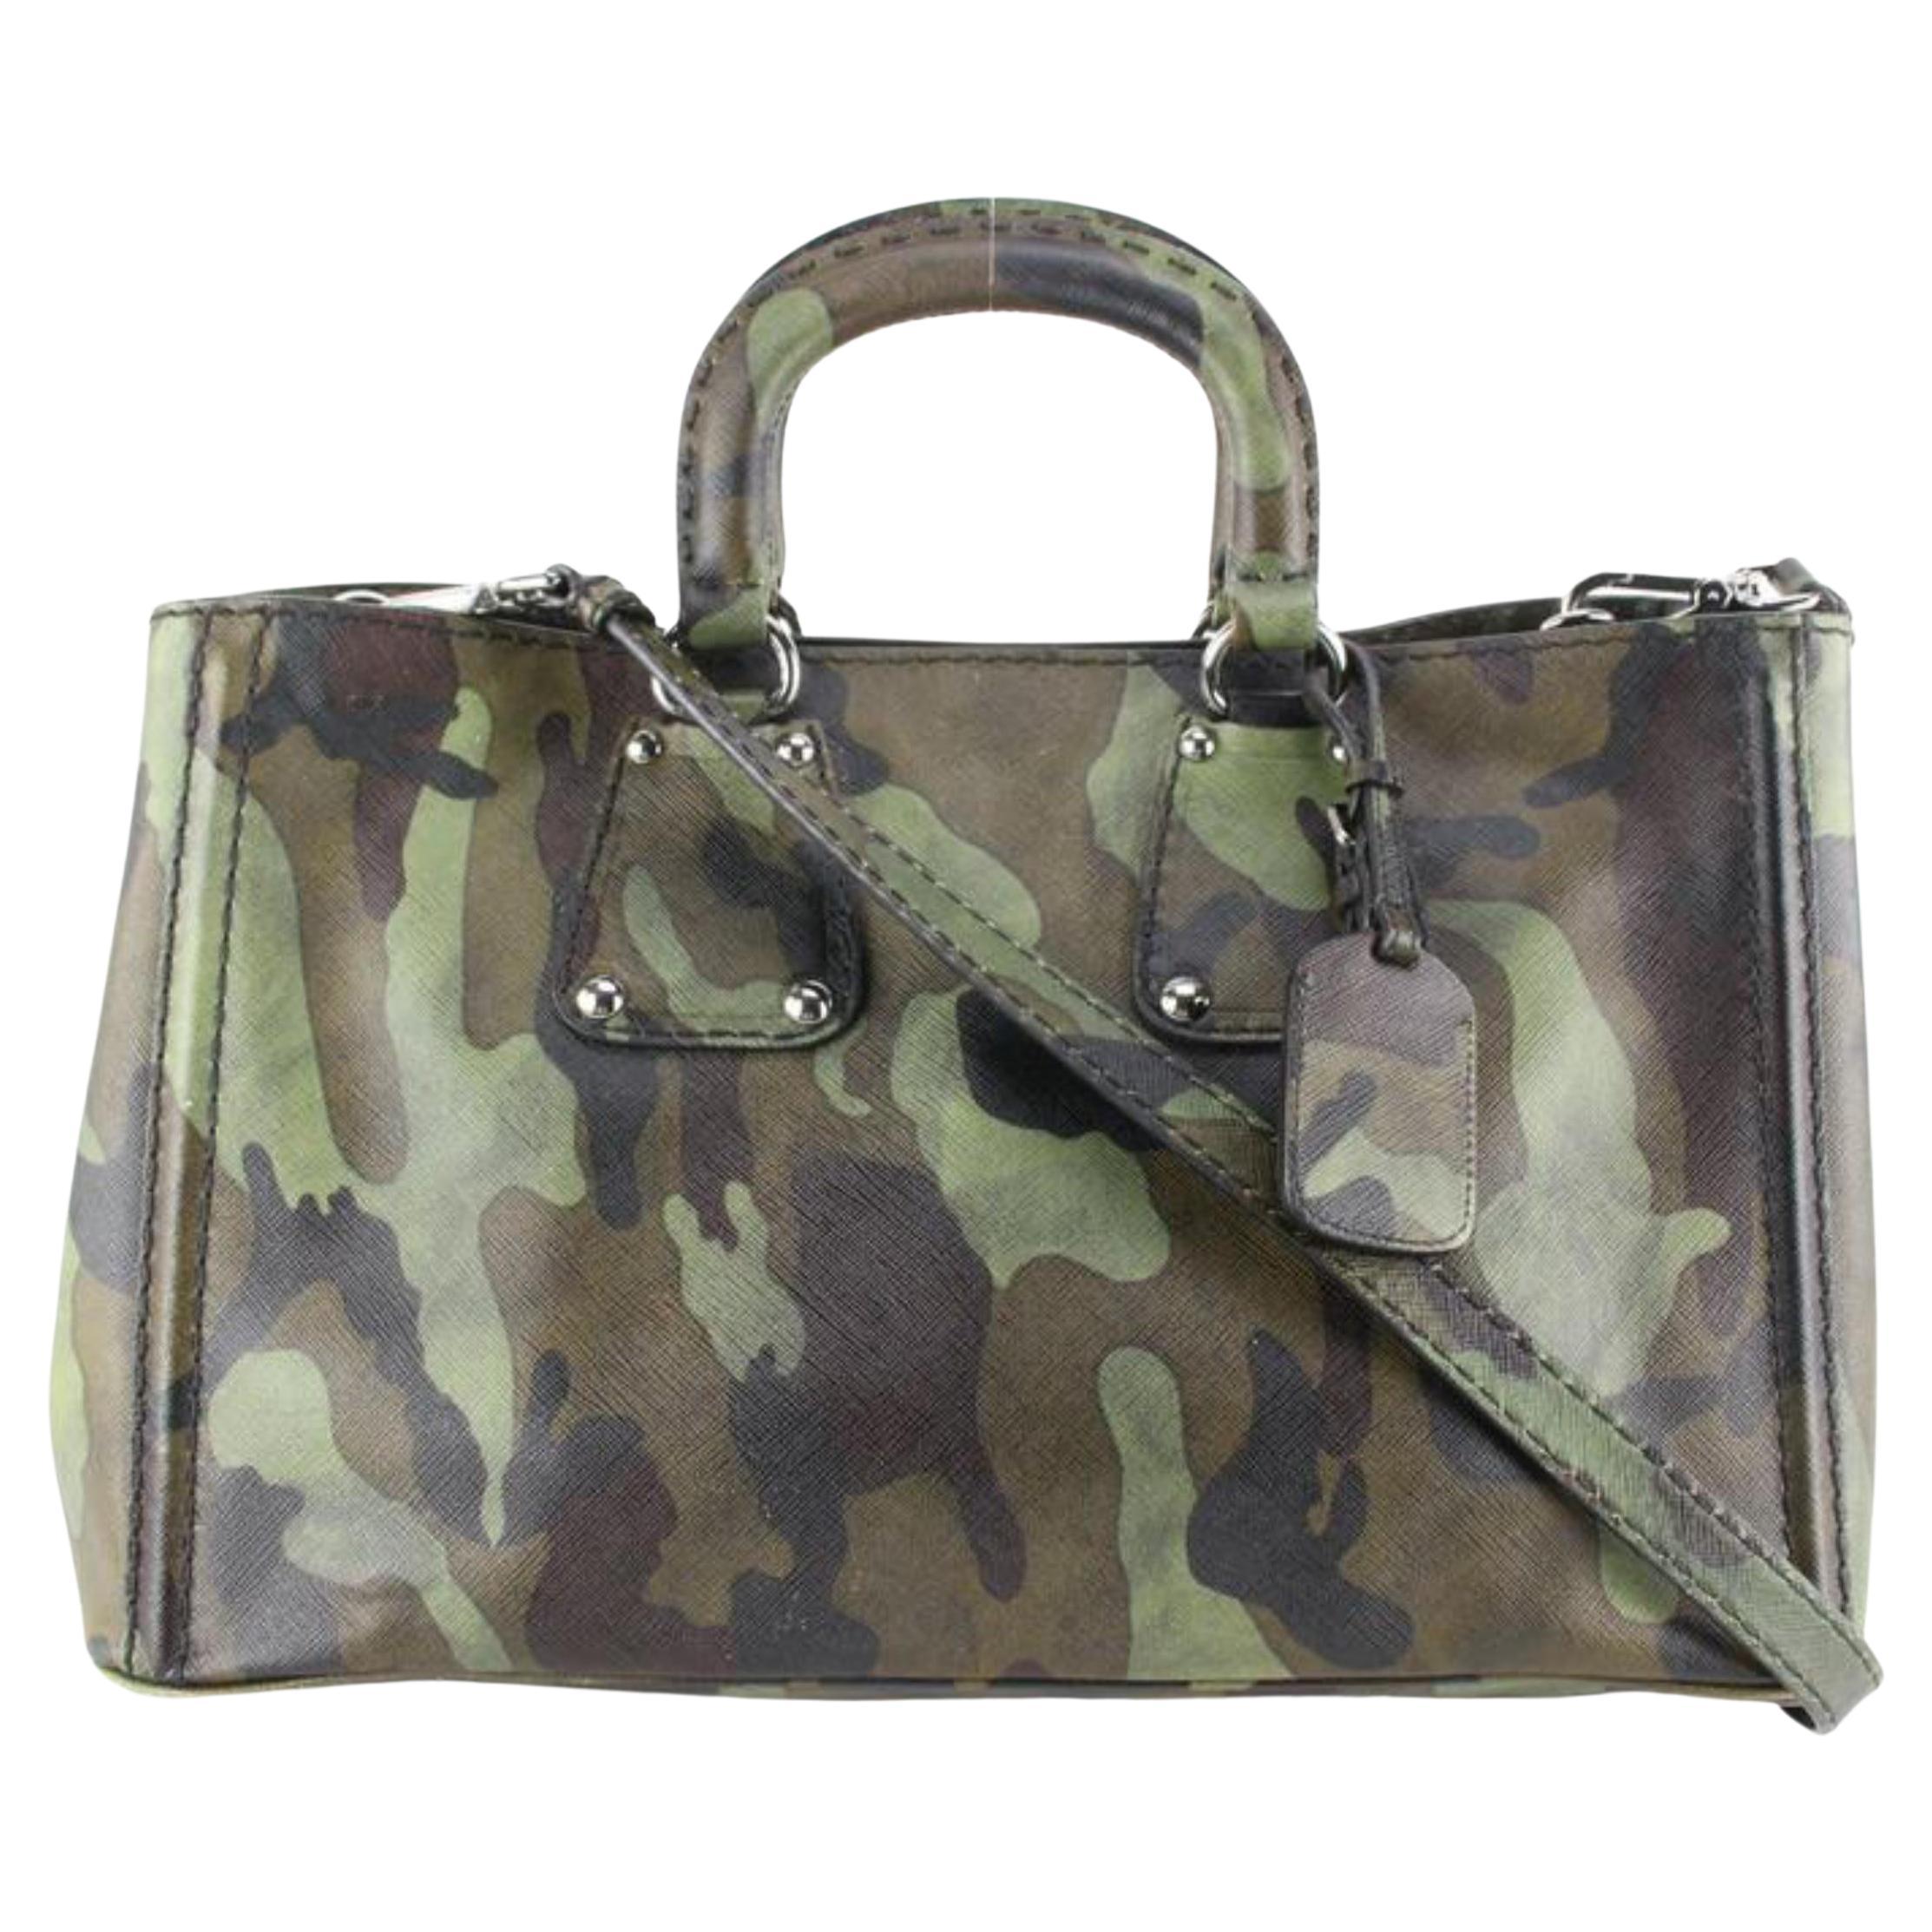 Prada Camouflage Saffiano Leather Mimetico 2way Bag 12p630s For Sale